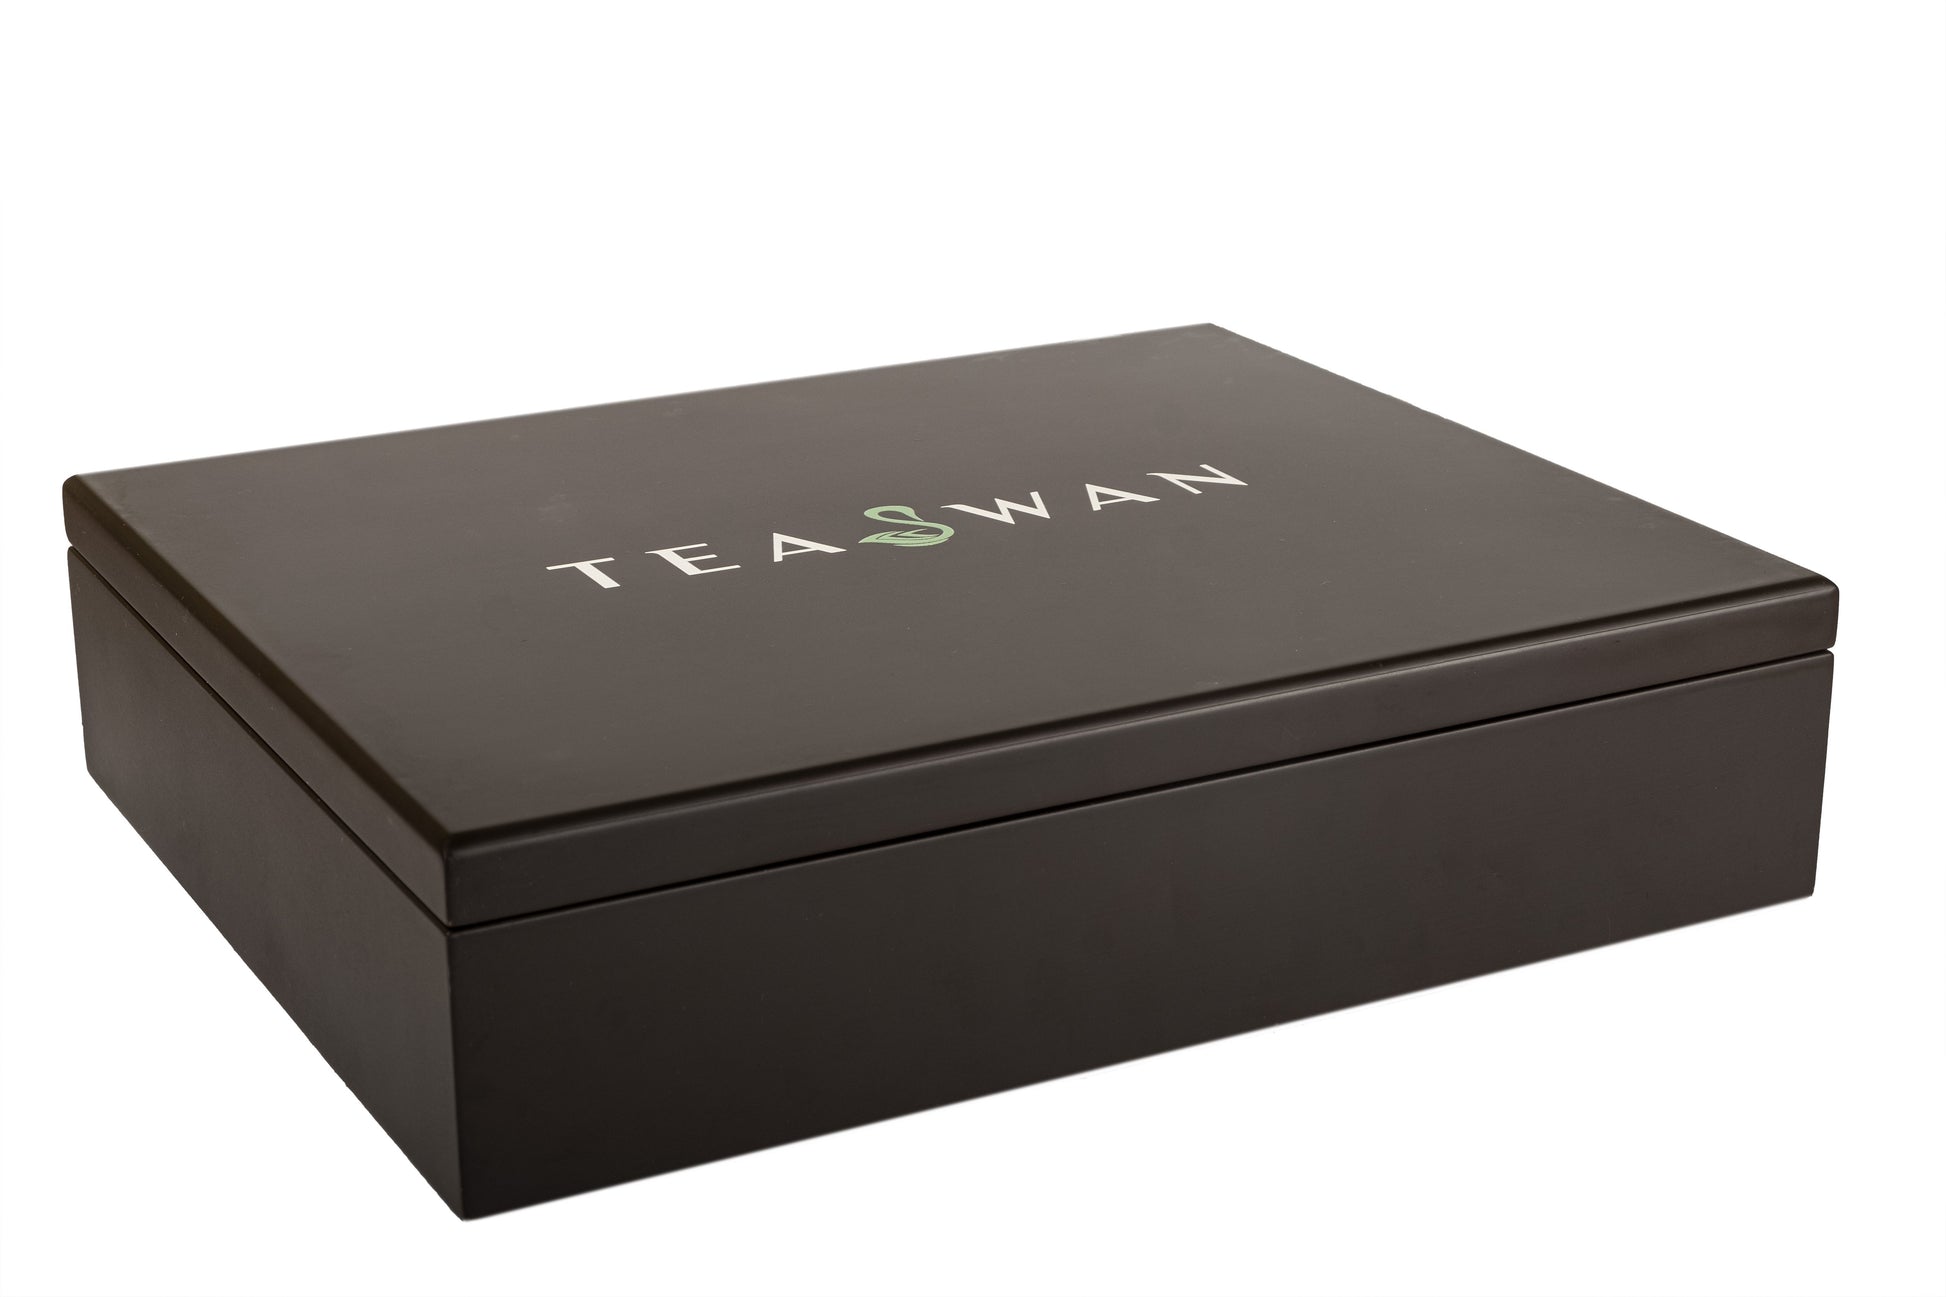 Signature Gift Box - TeaSwan